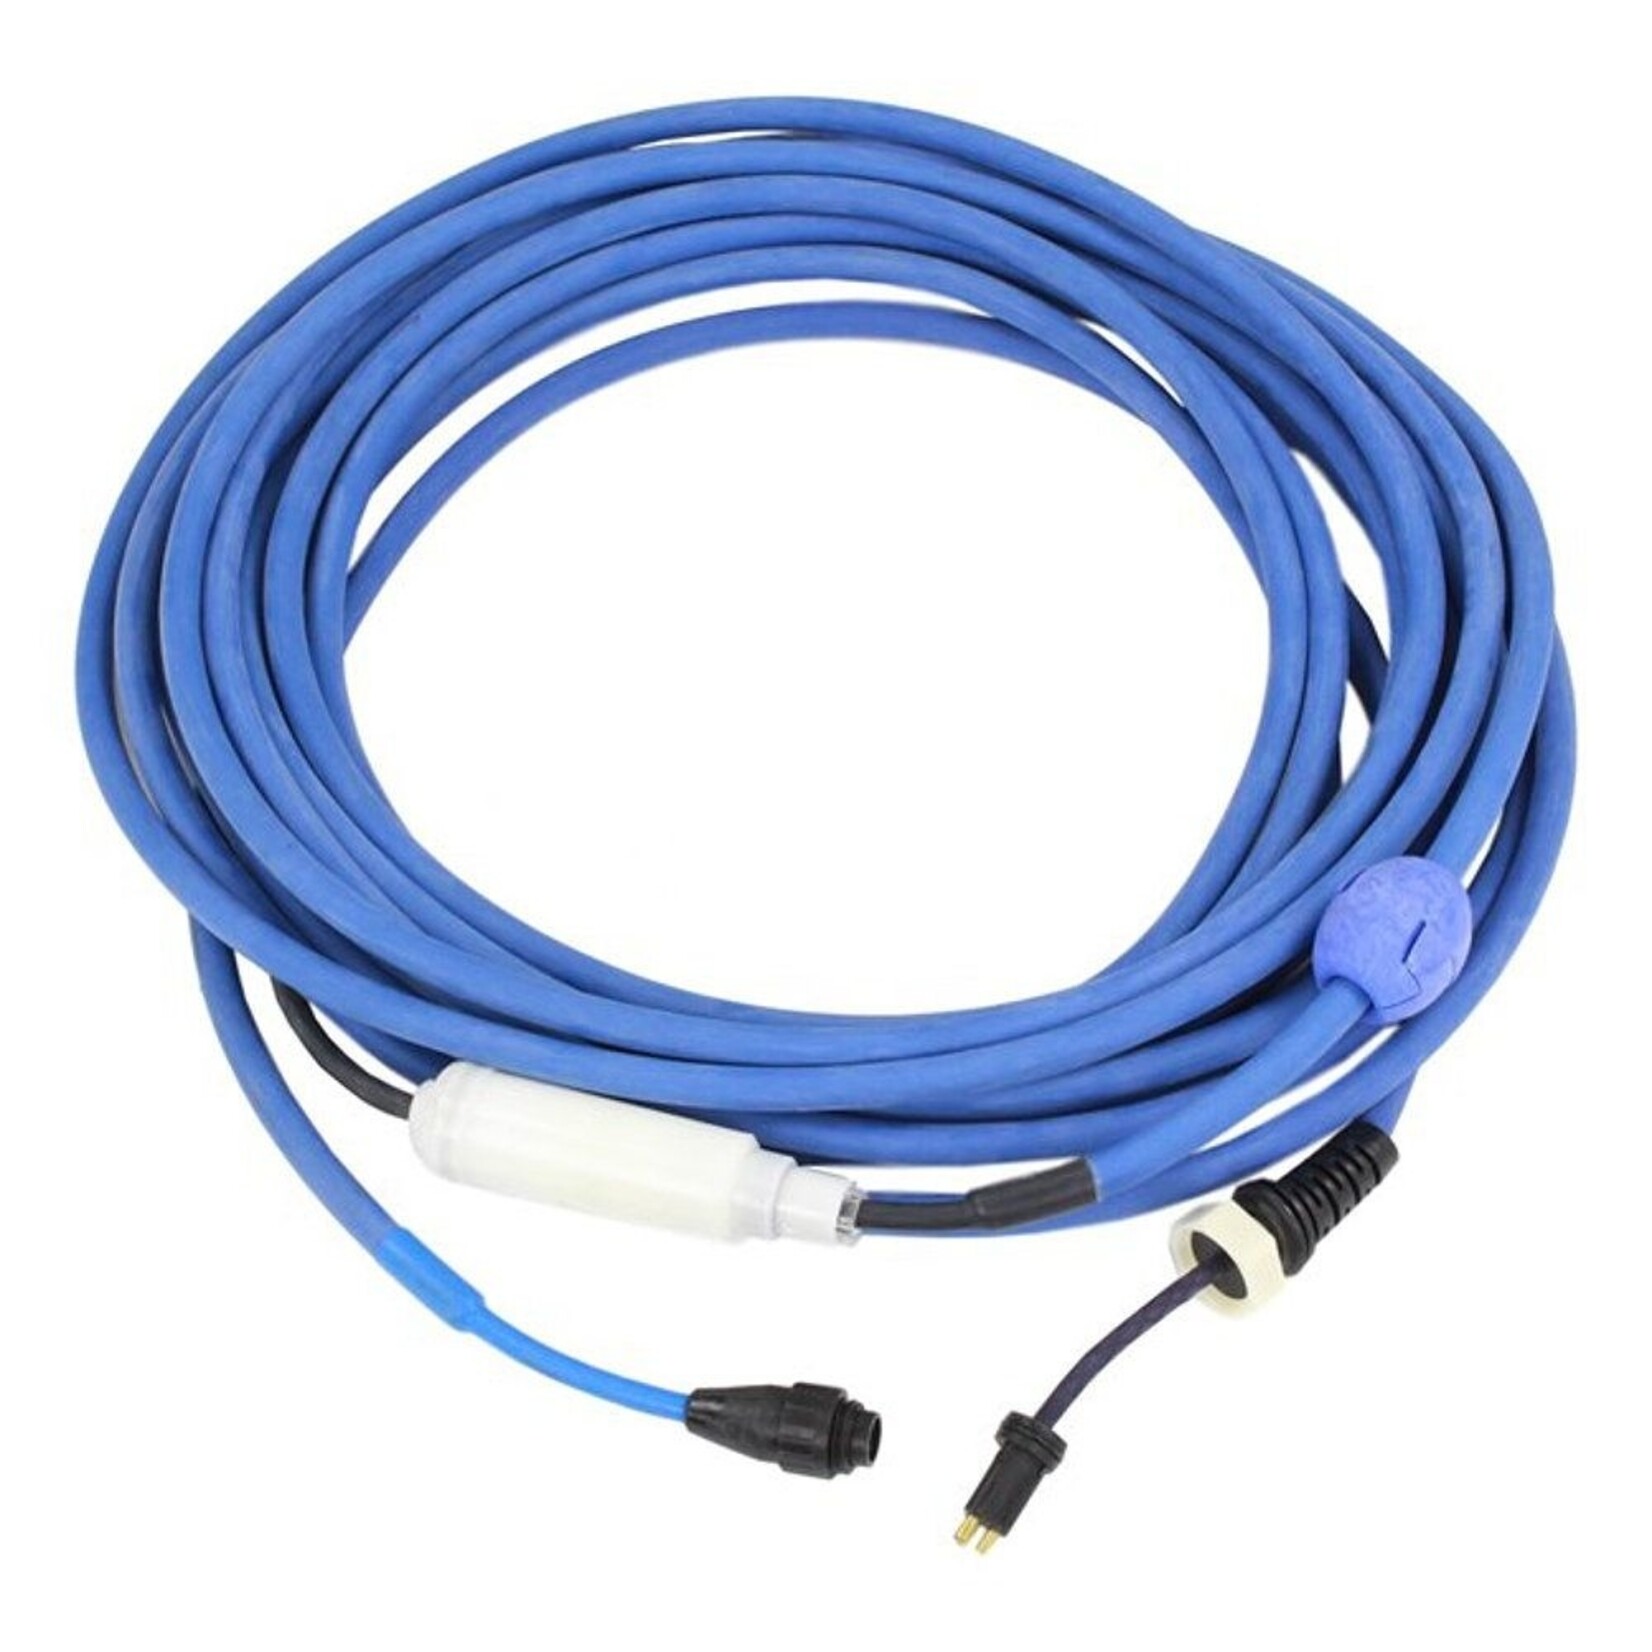 Maytronics Dolphin Maytronics 9995873-DIY Dolphin Dynamic kabel met swivel voor M400